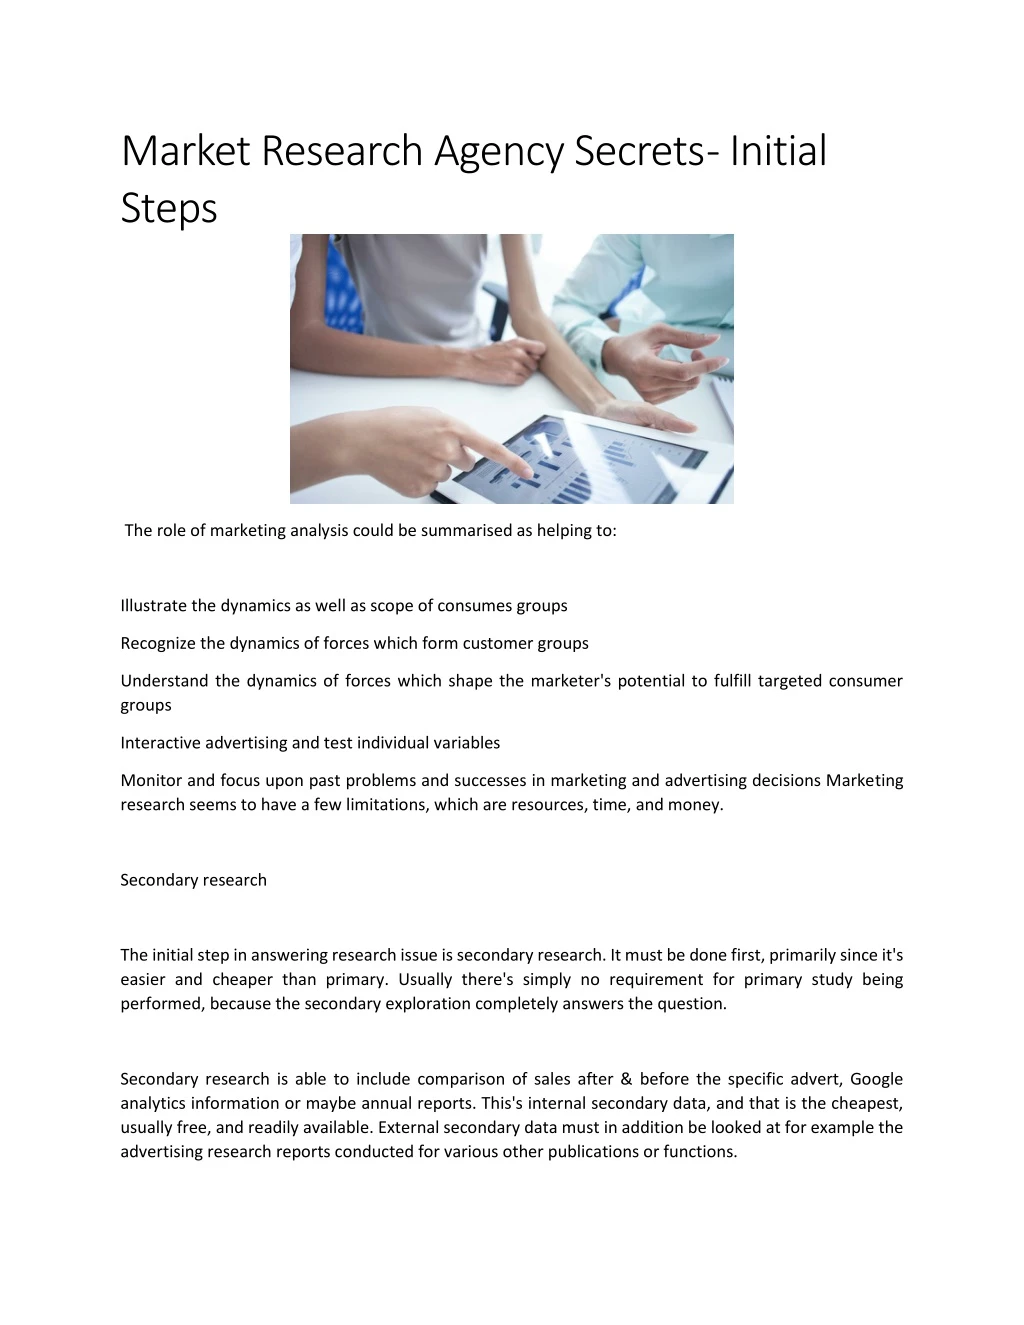 market research agency secrets initial steps